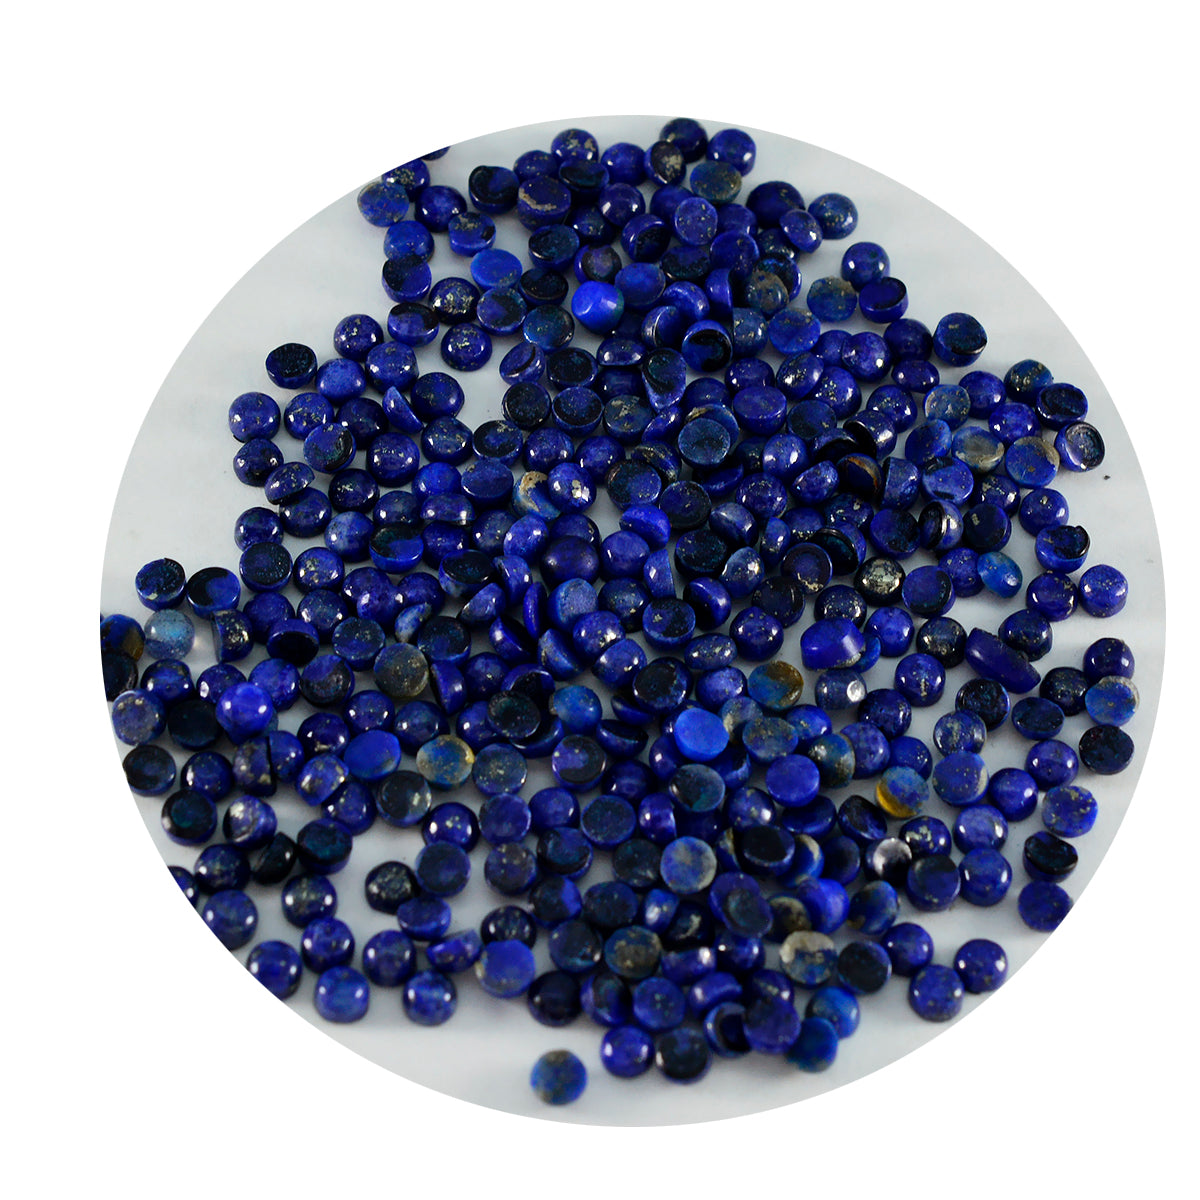 Riyogems 1PC Blue Lapis Lazuli Cabochon 3x3 mm Round Shape pretty Quality Stone